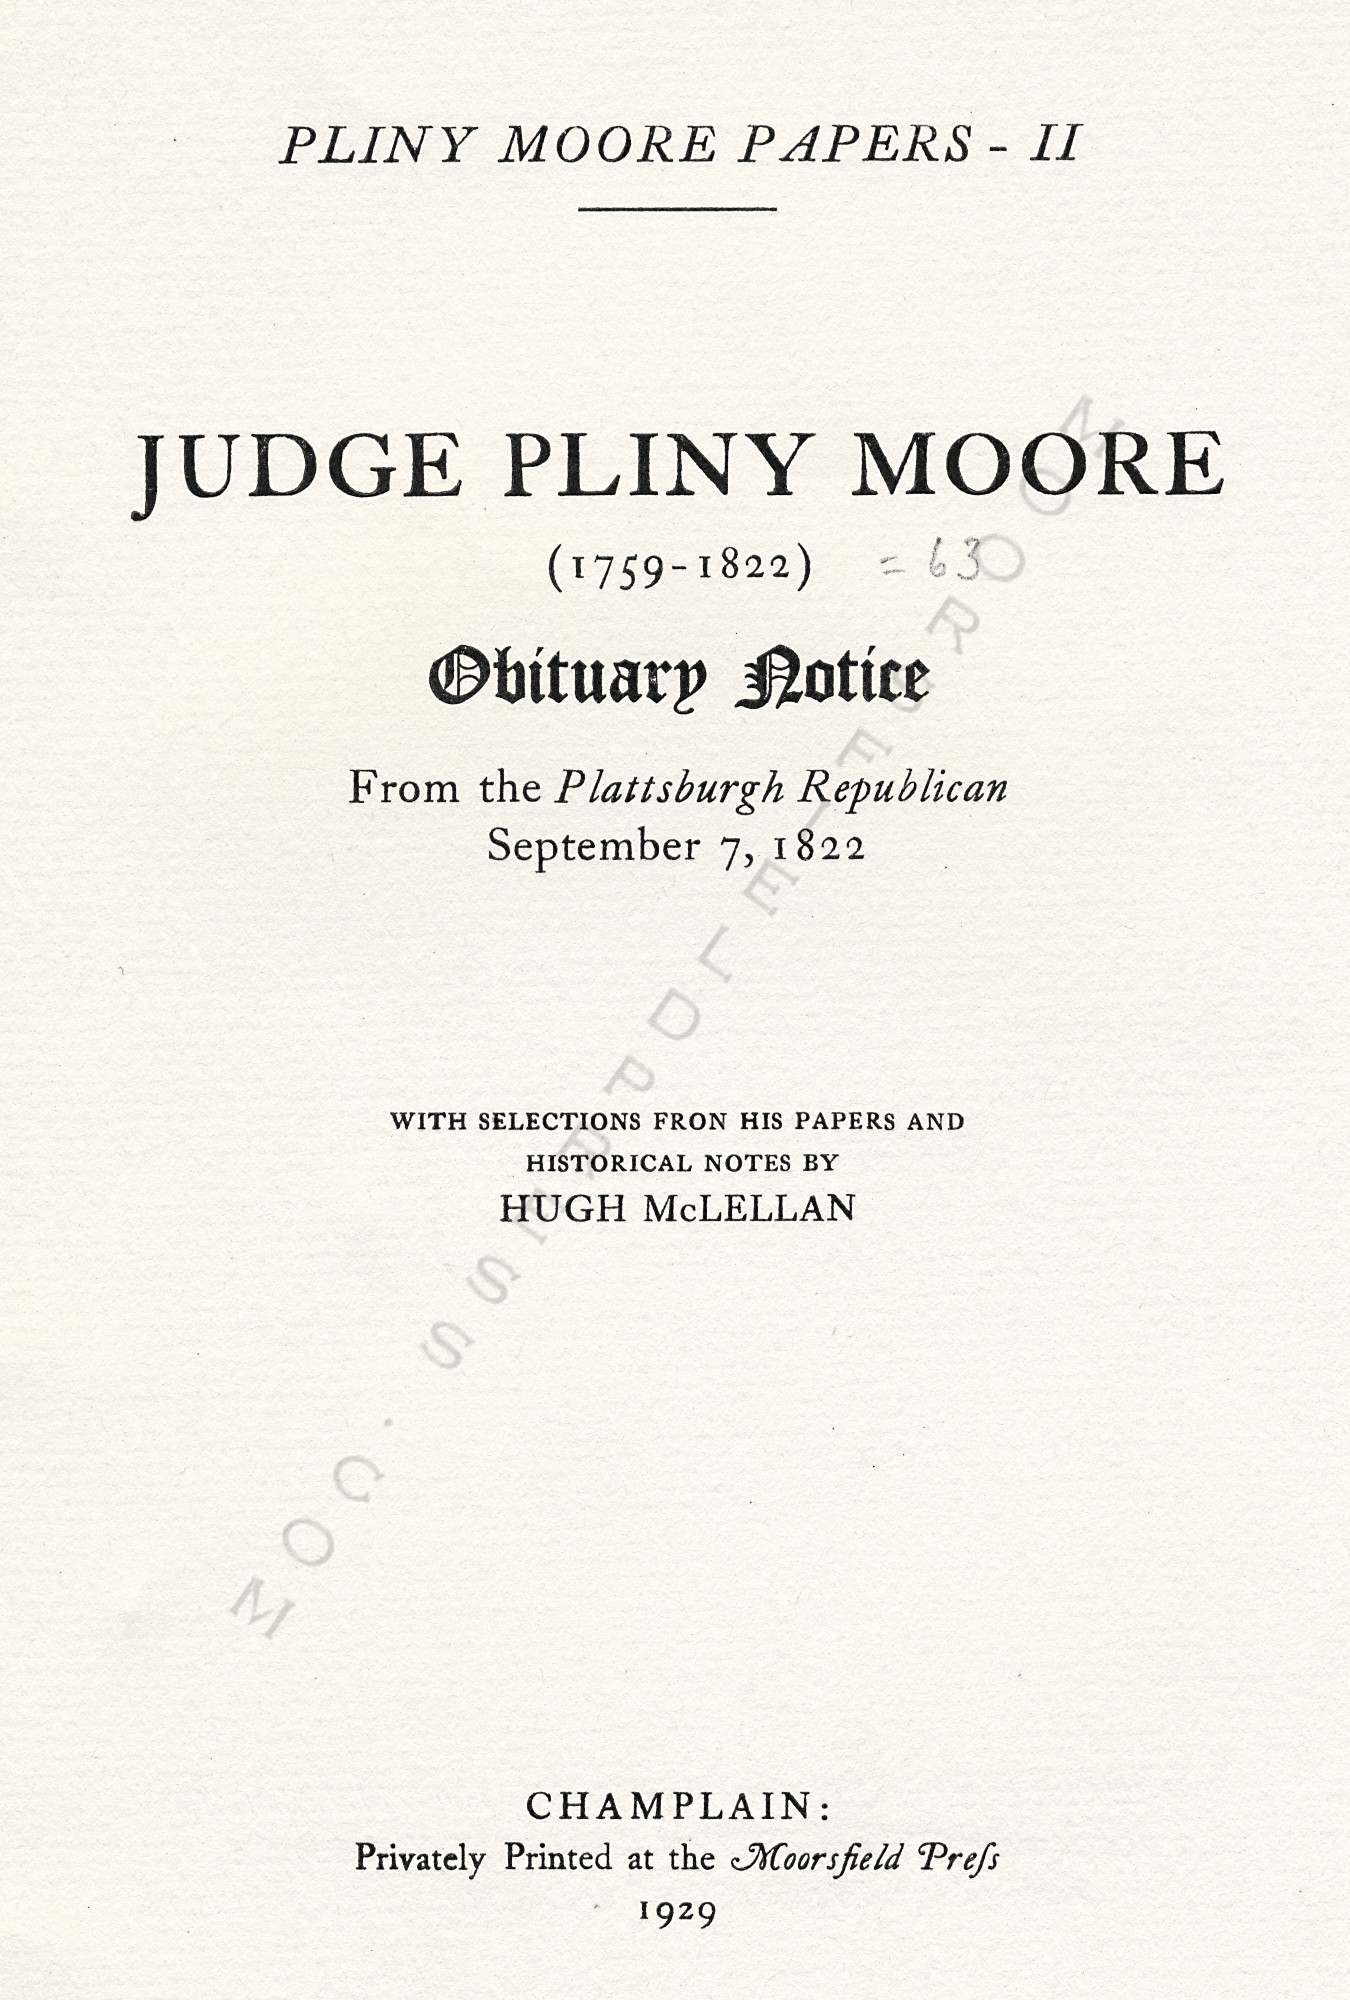 judge pliny moore obituary notice